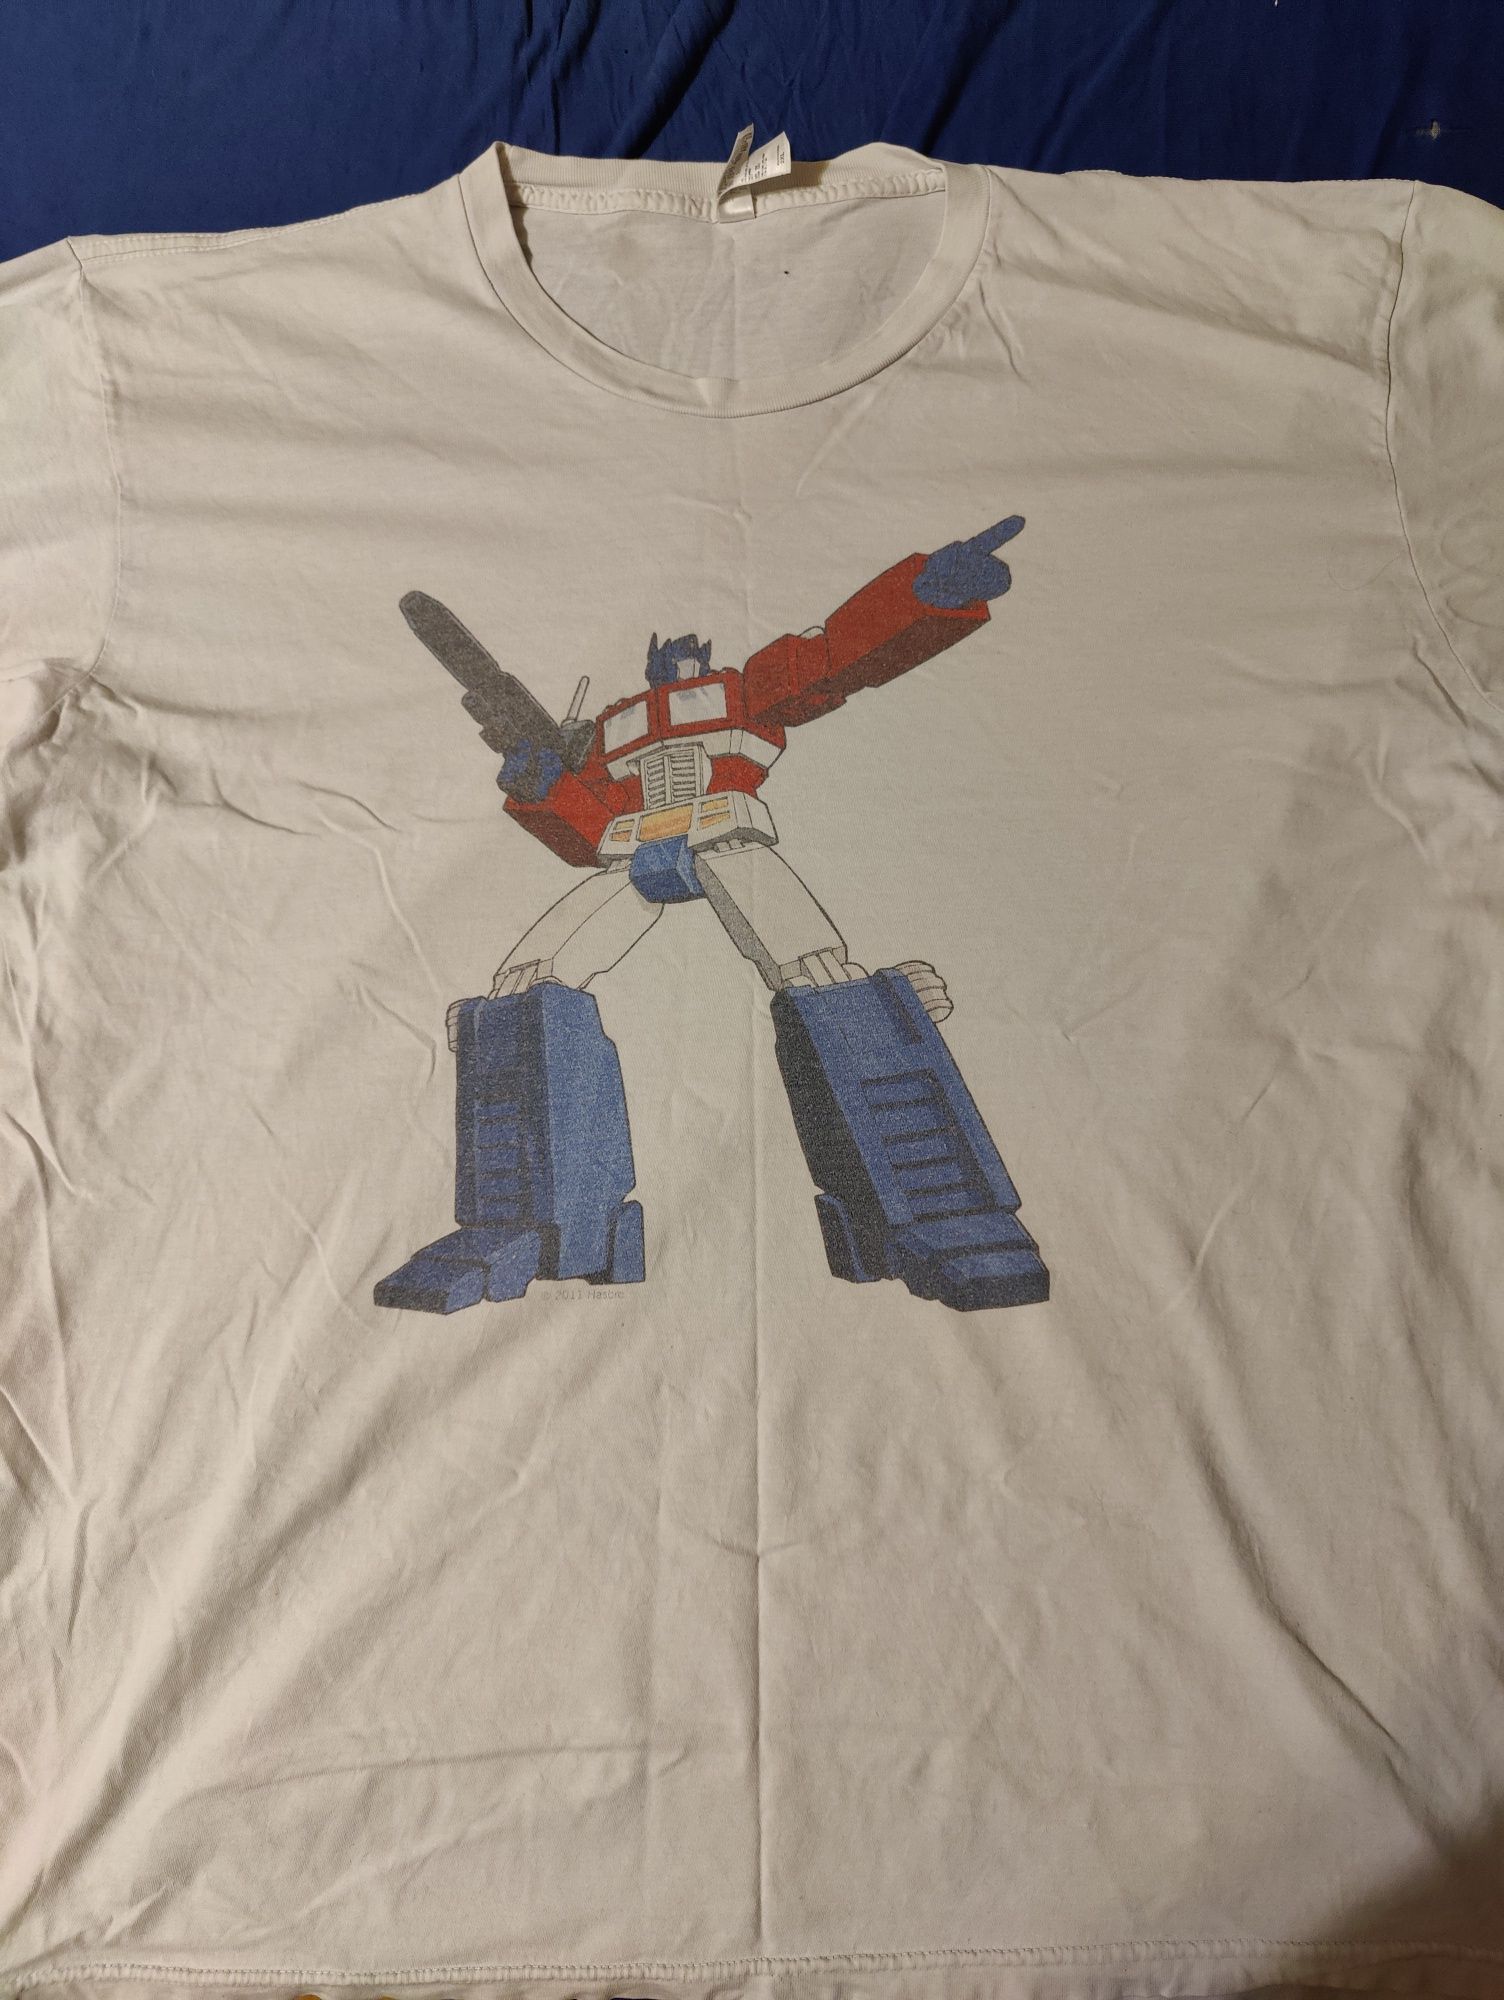 Zestaw koszulek XL-XXL (m.in. Pyrkon i Transformers)